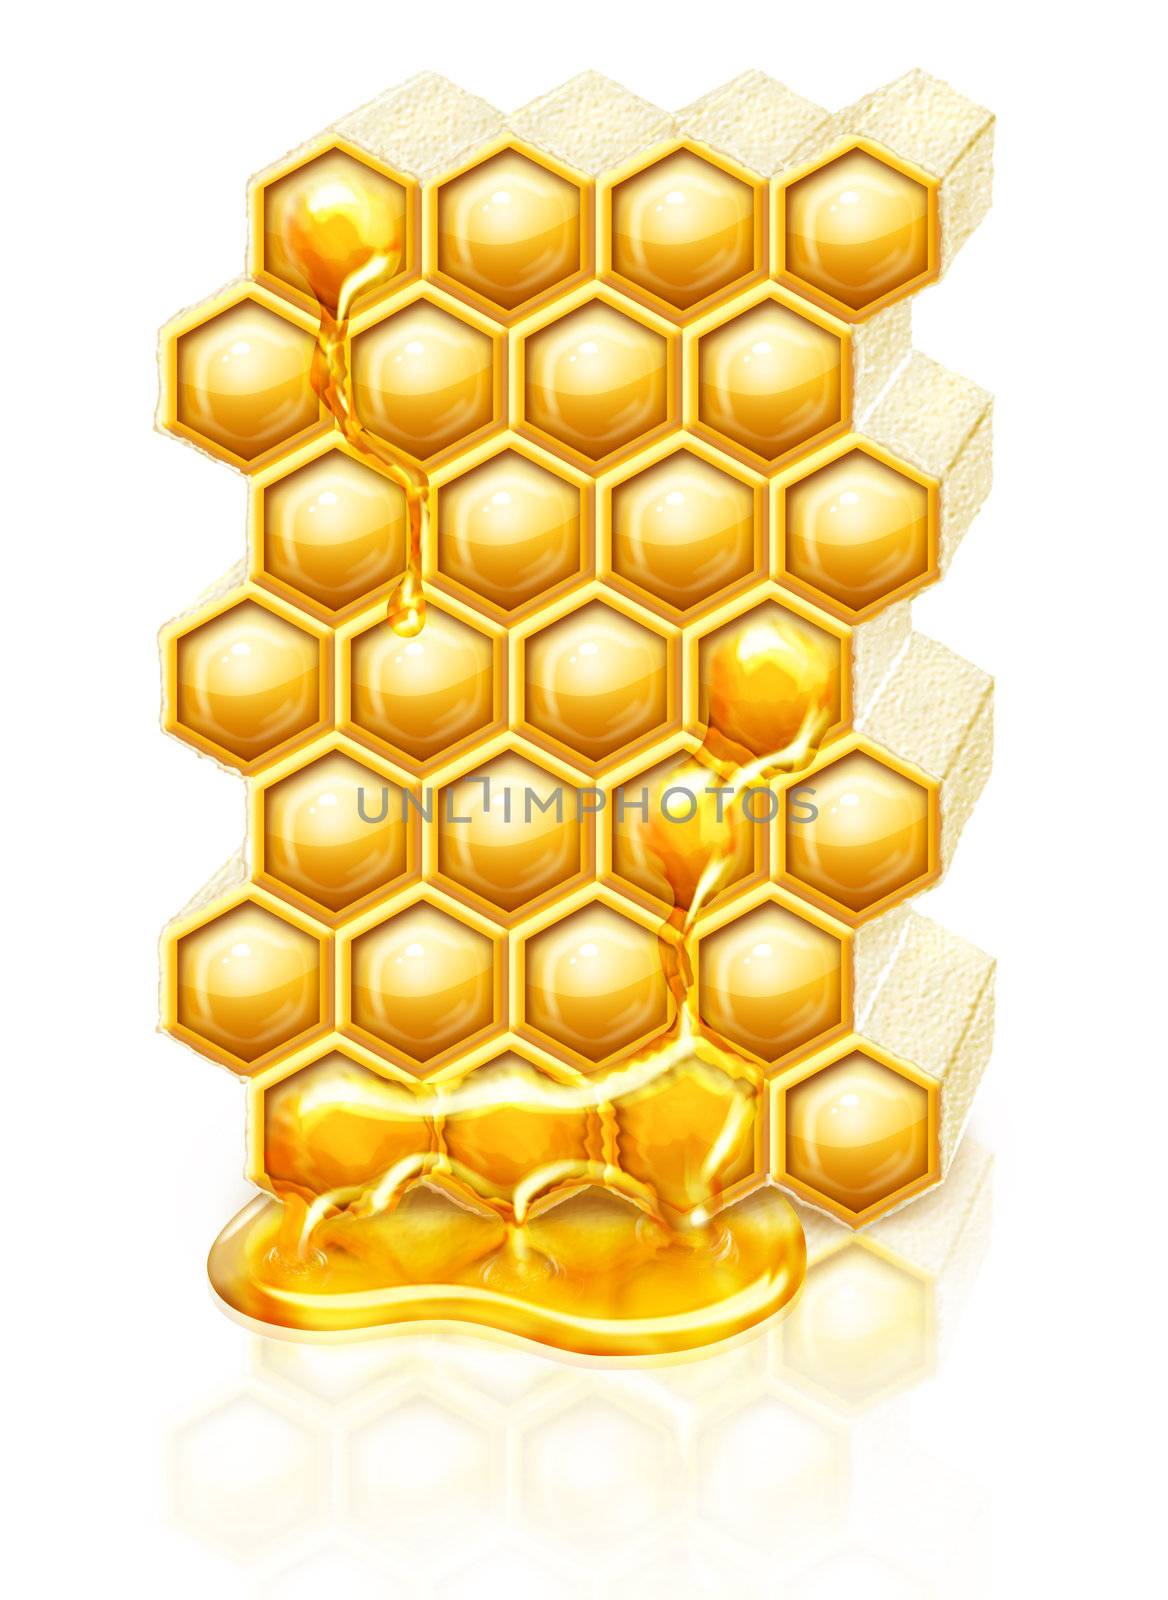 Bee honeycombs by igor_stramyk